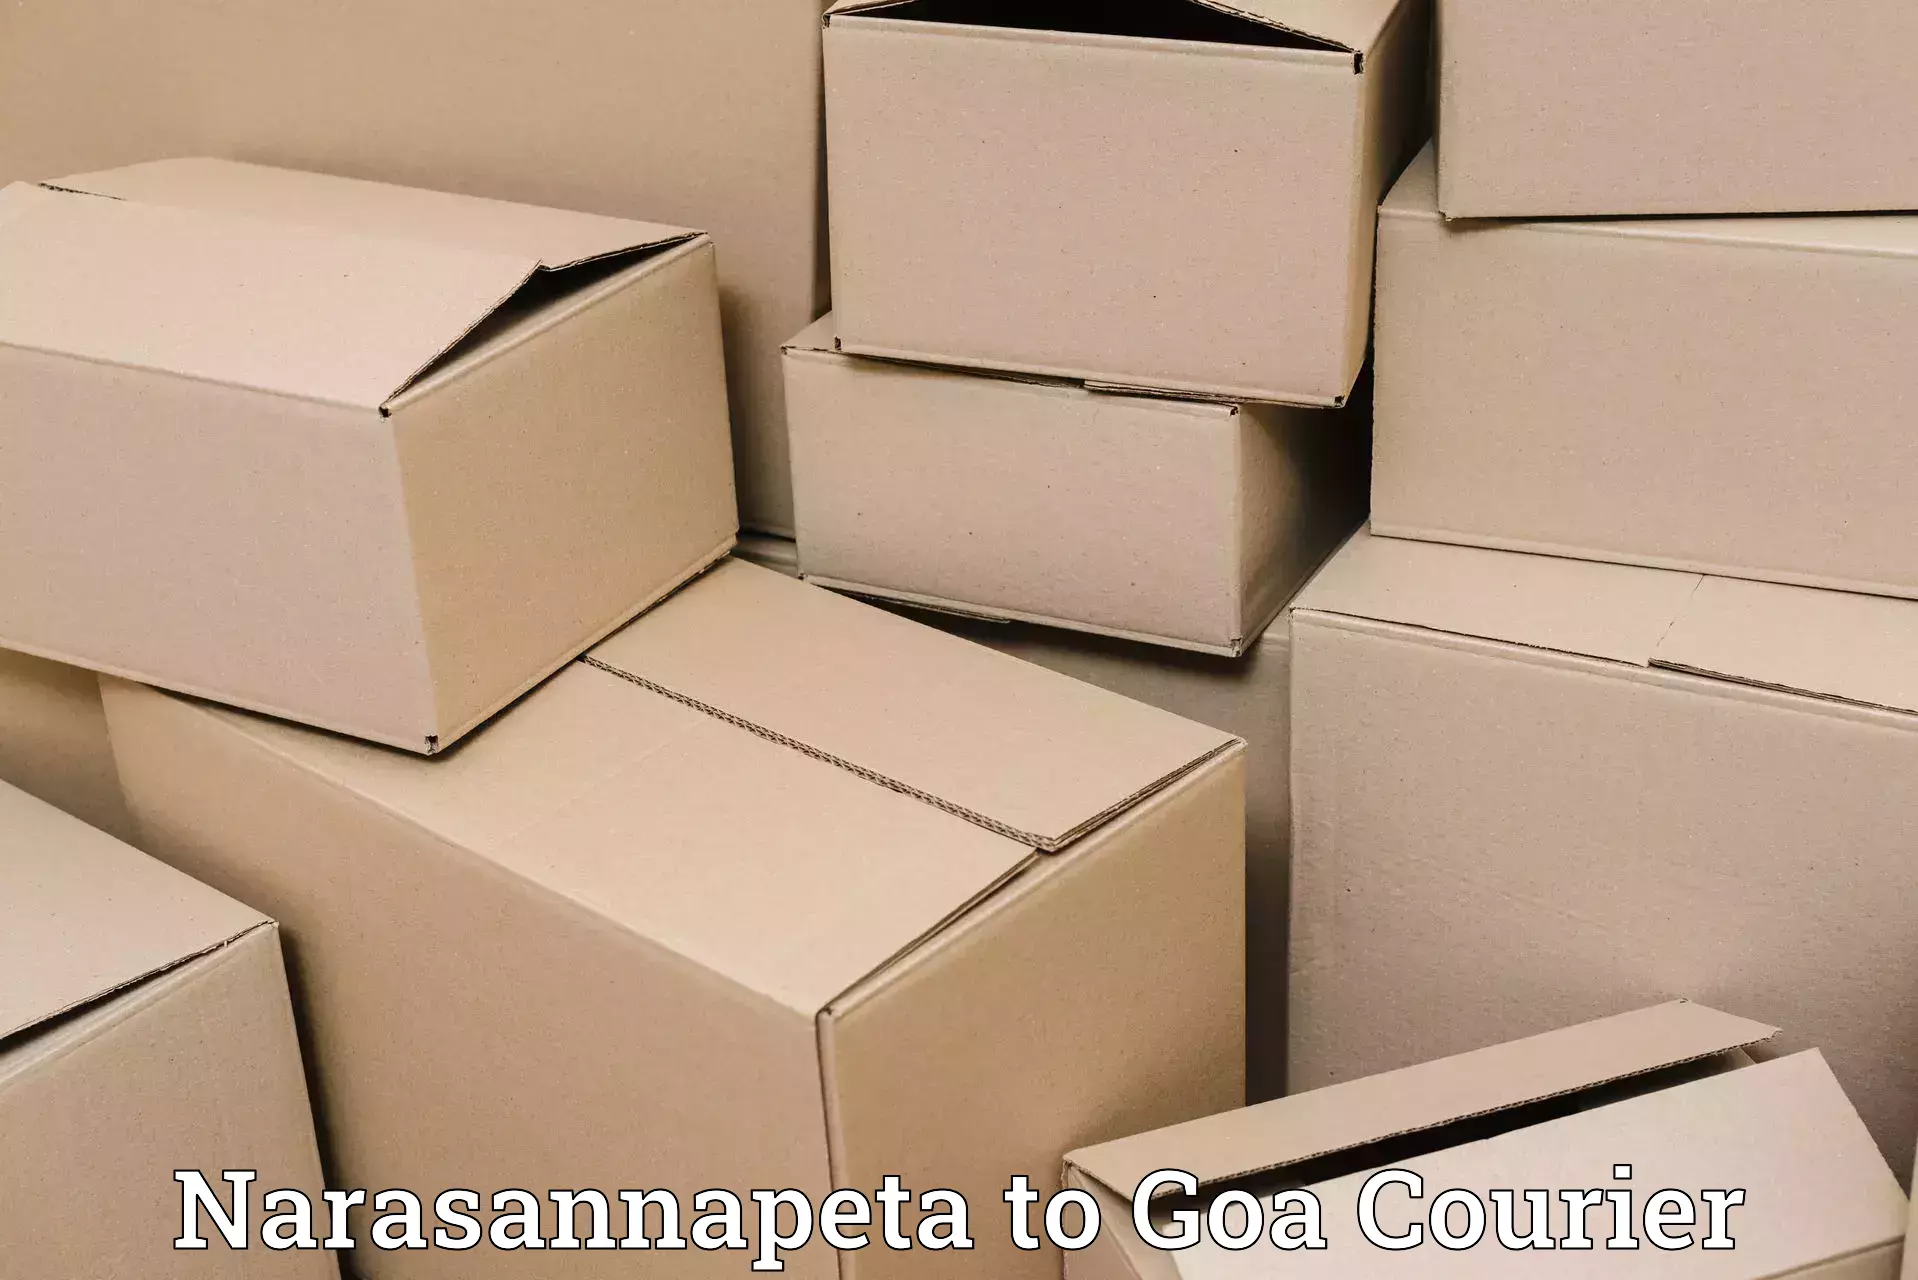 Quick dispatch service Narasannapeta to South Goa